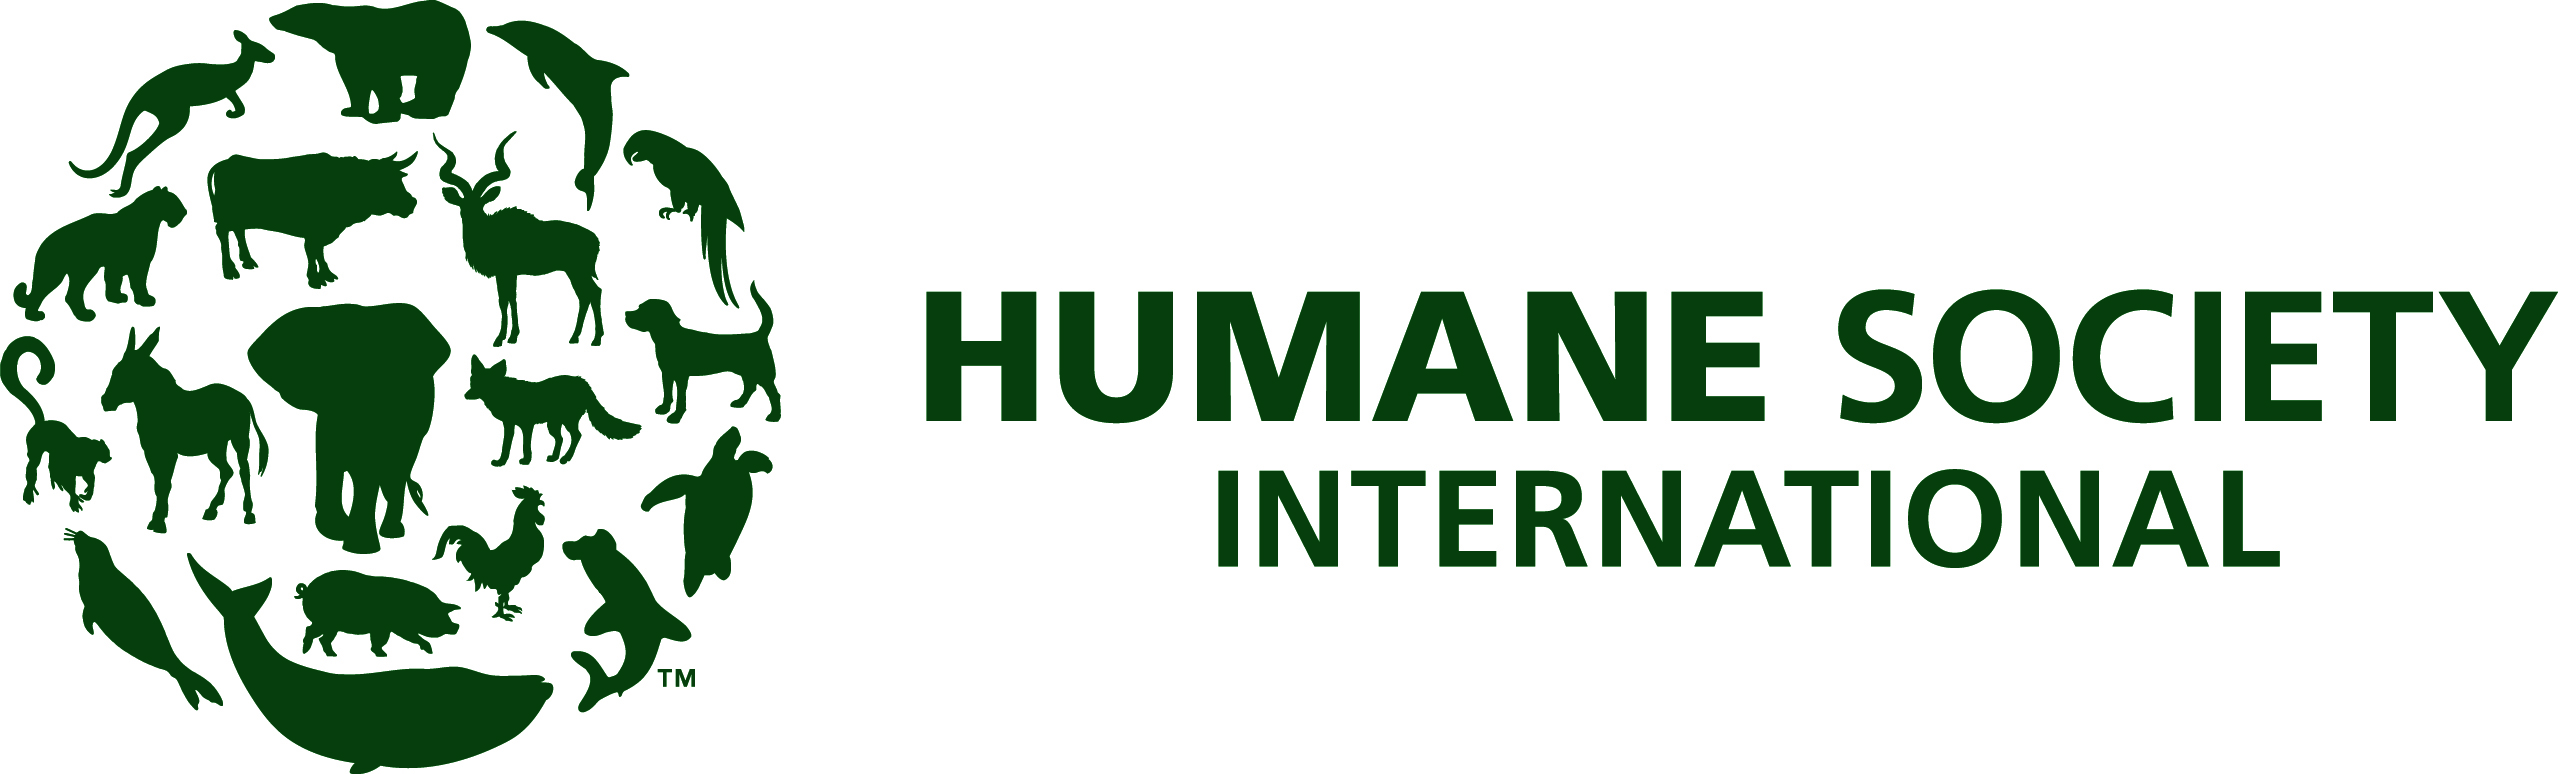 Humane association caresource indiana com